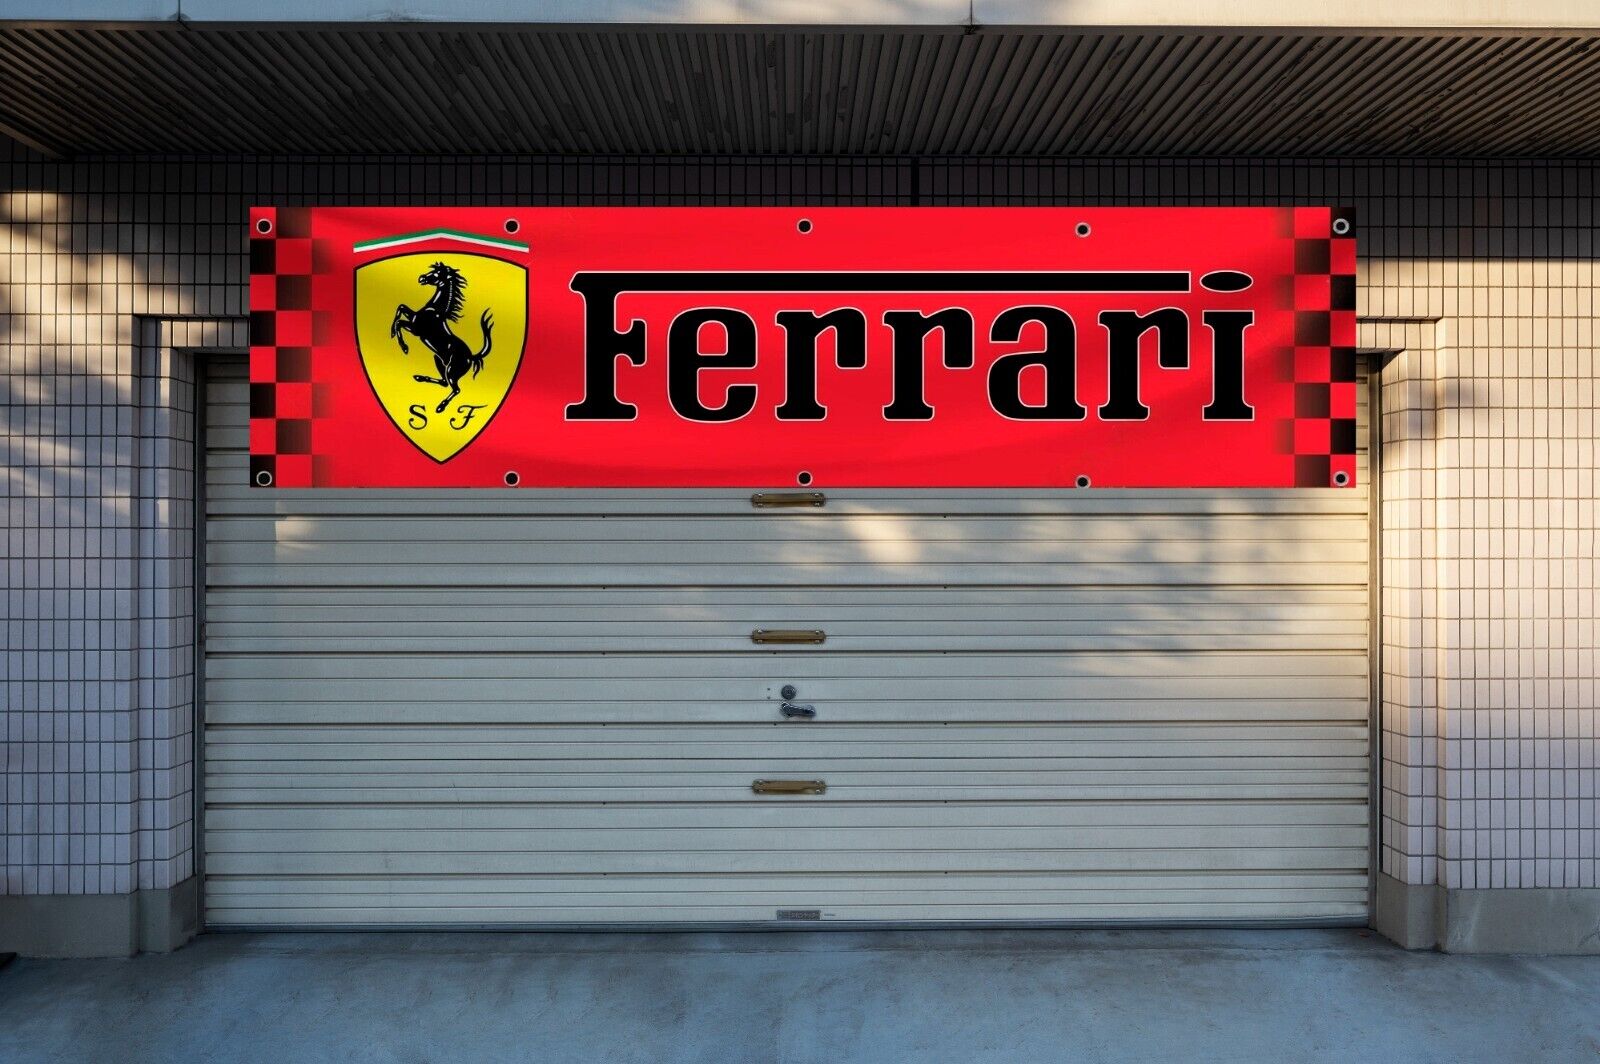 Ferrari 2x8 Ft Banner Flag Racing Italy Car Man Cave Garage Workshop Wall Decor